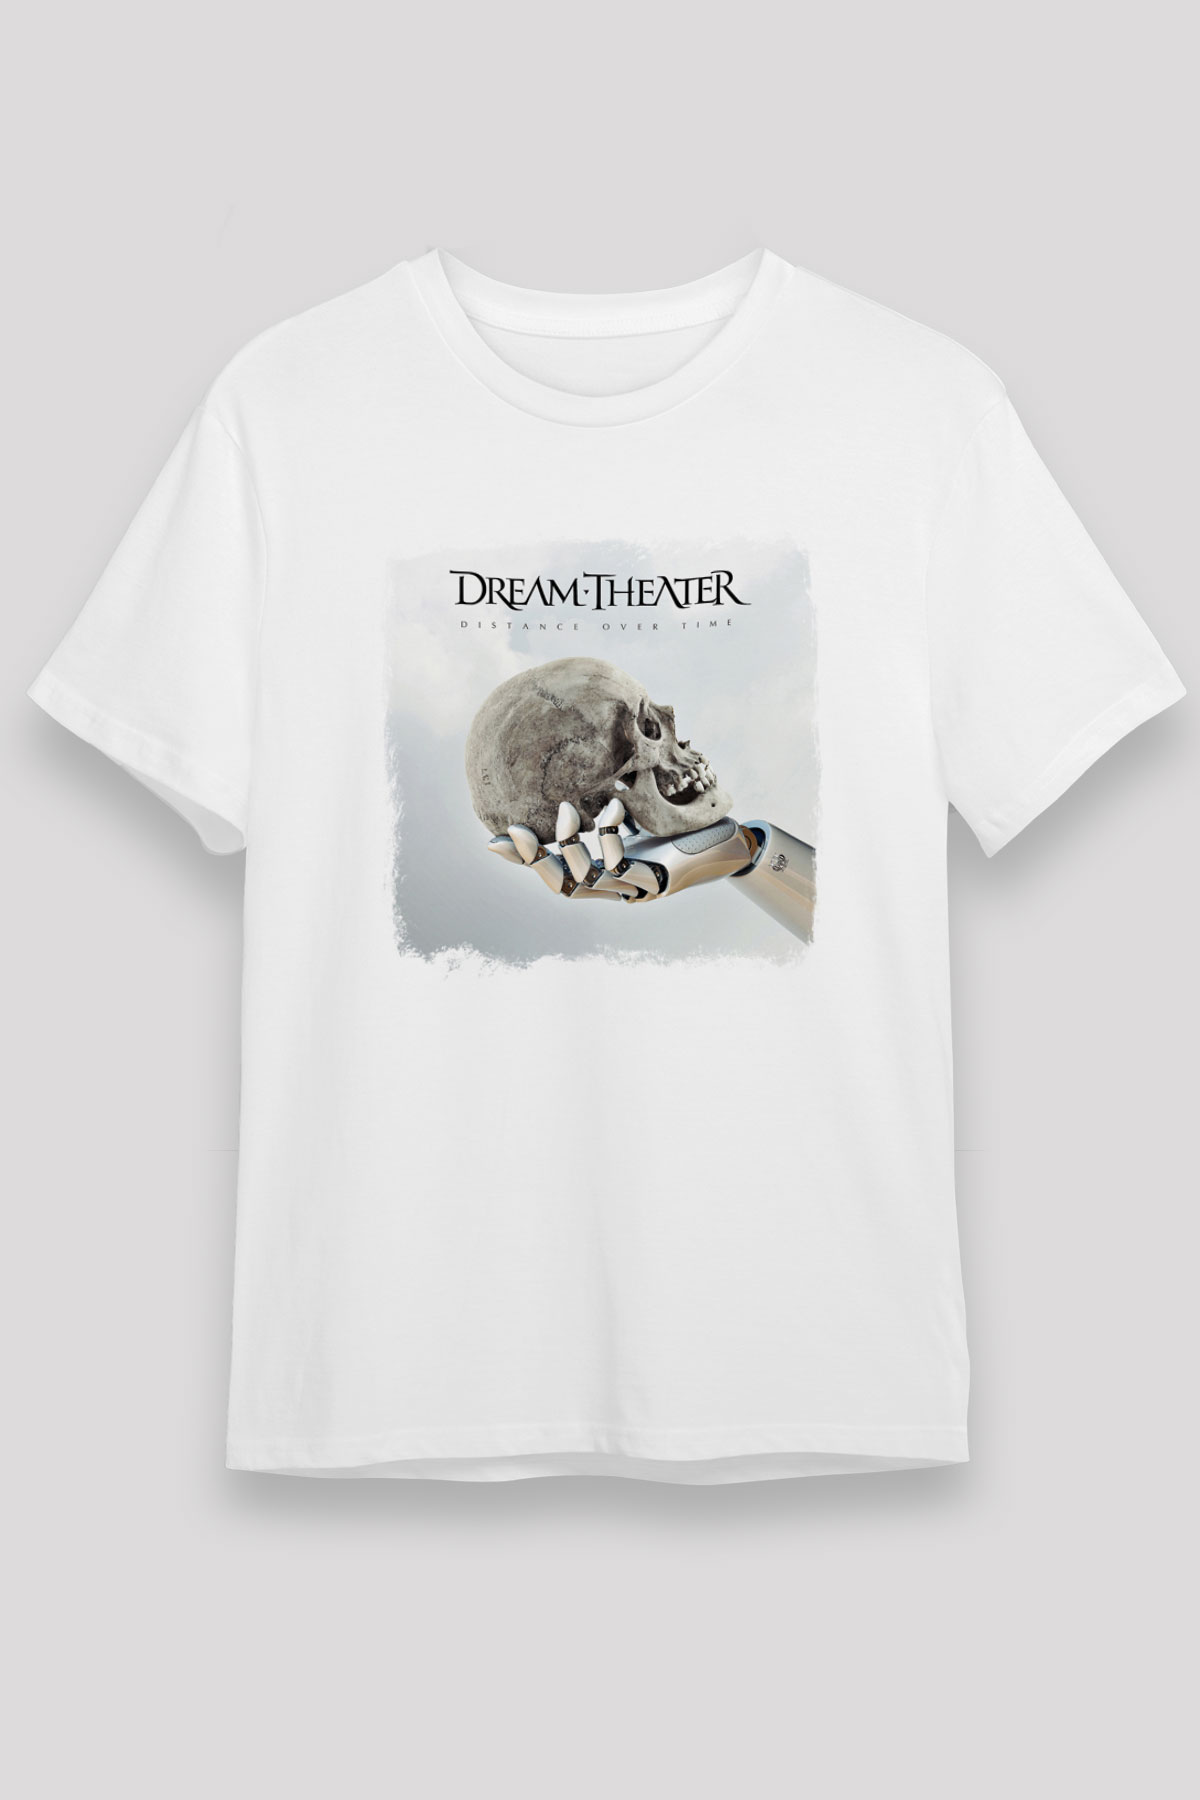 Dream Theater T shirt,Music Band,Unisex Tshirt 15/